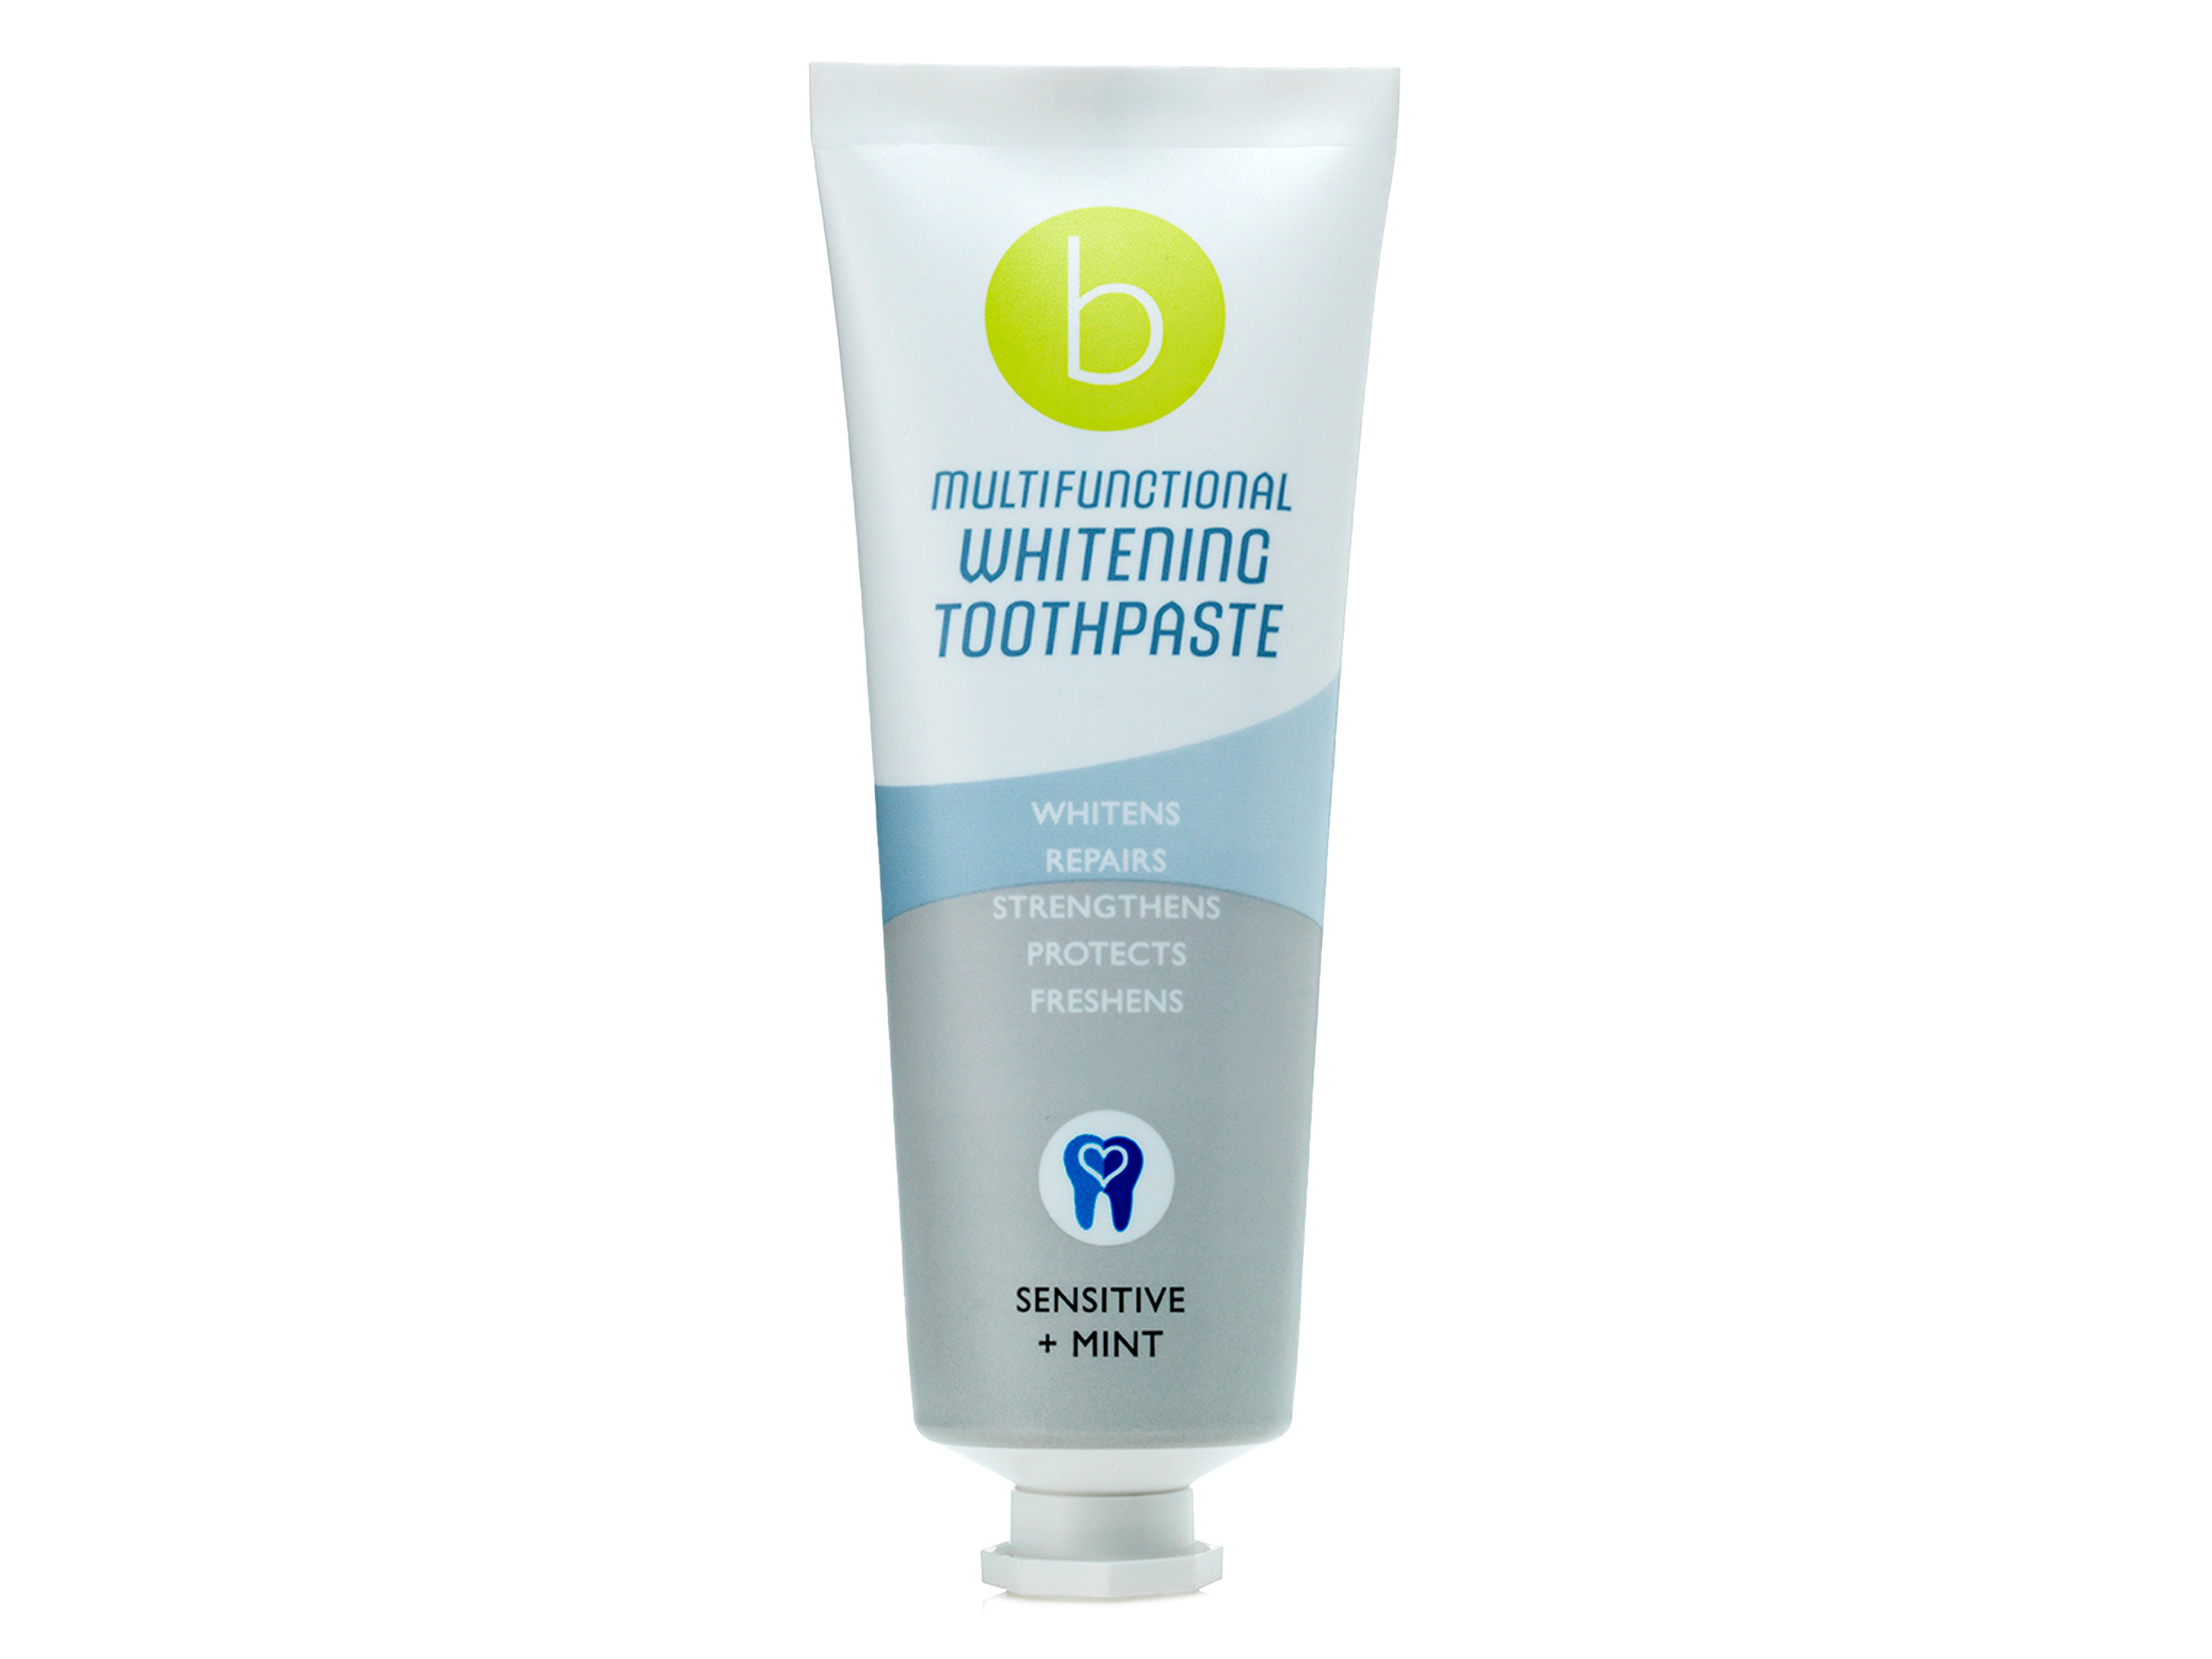 Beconfident Multifunctional Whitening Toothpaste Sensitive, mint, 75 ml